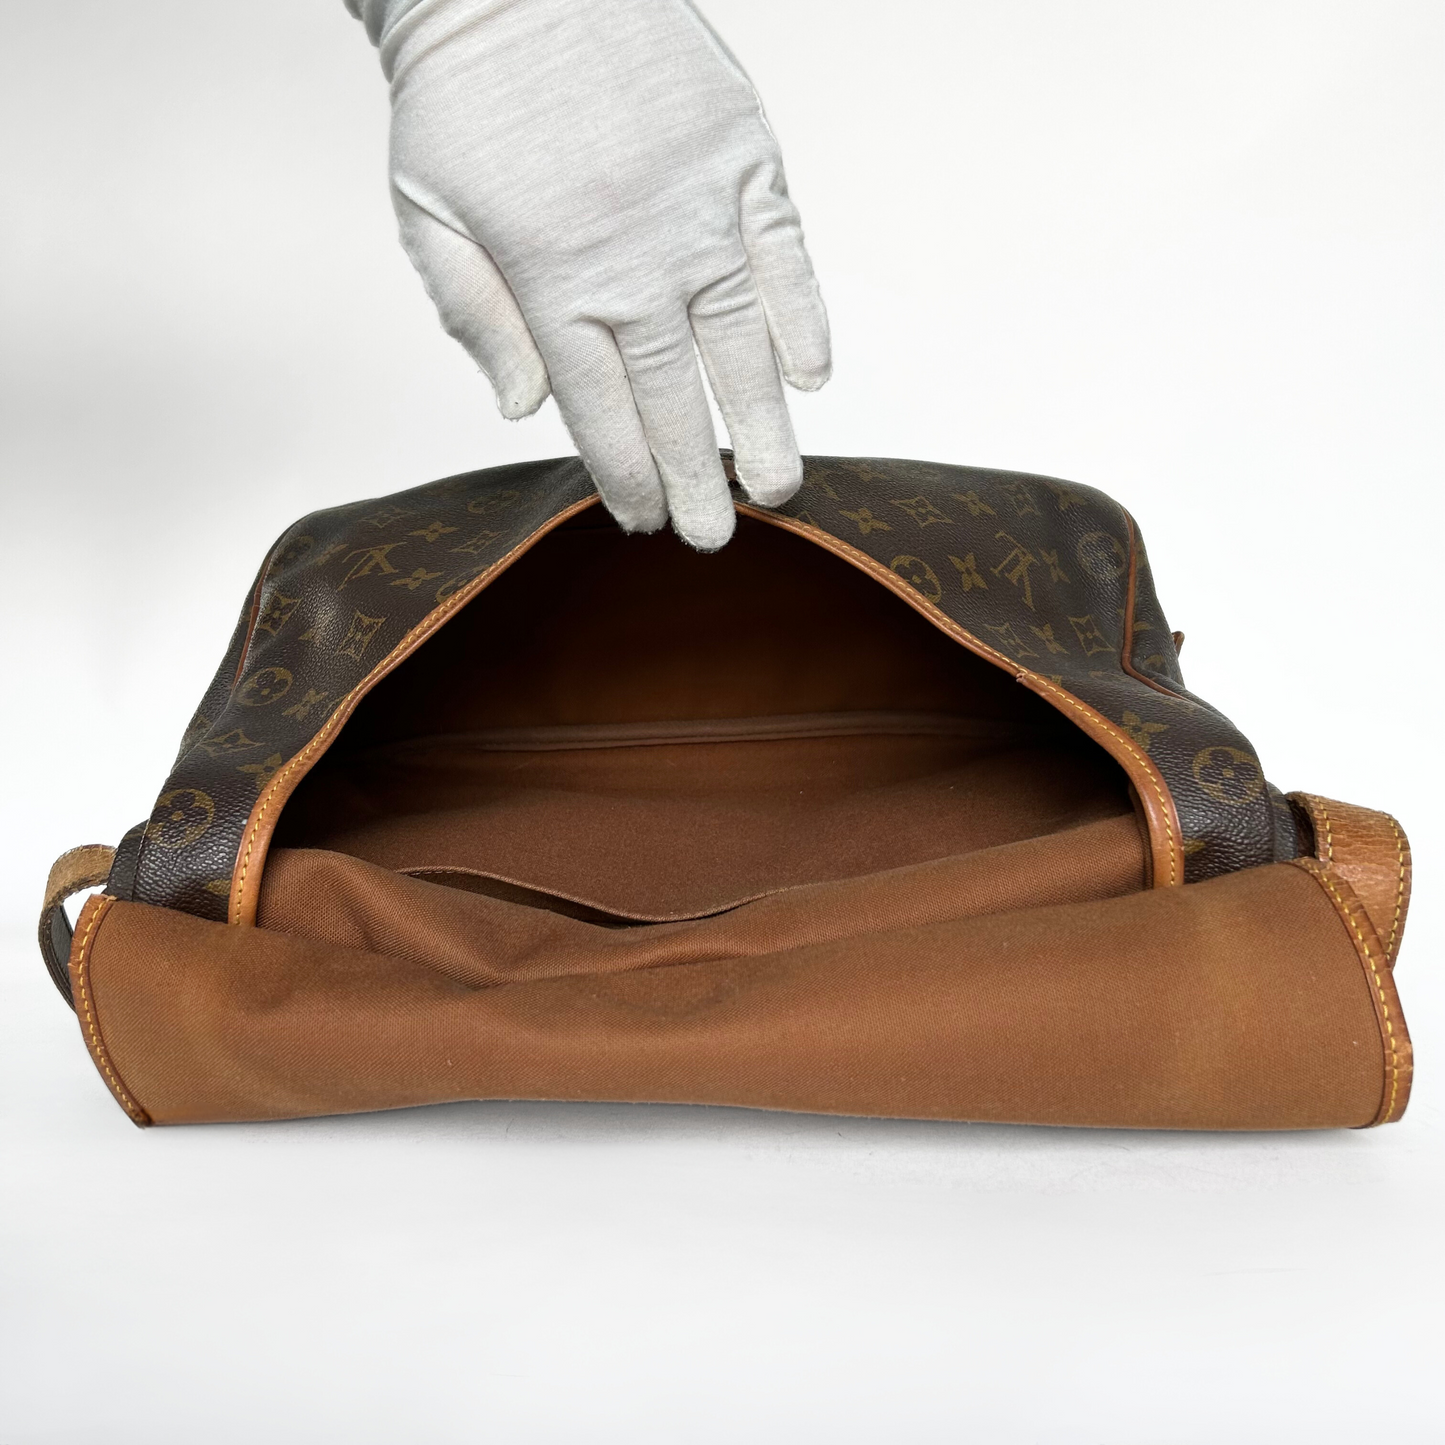 Chanel Maxi Flap Bag Lambskin Leather